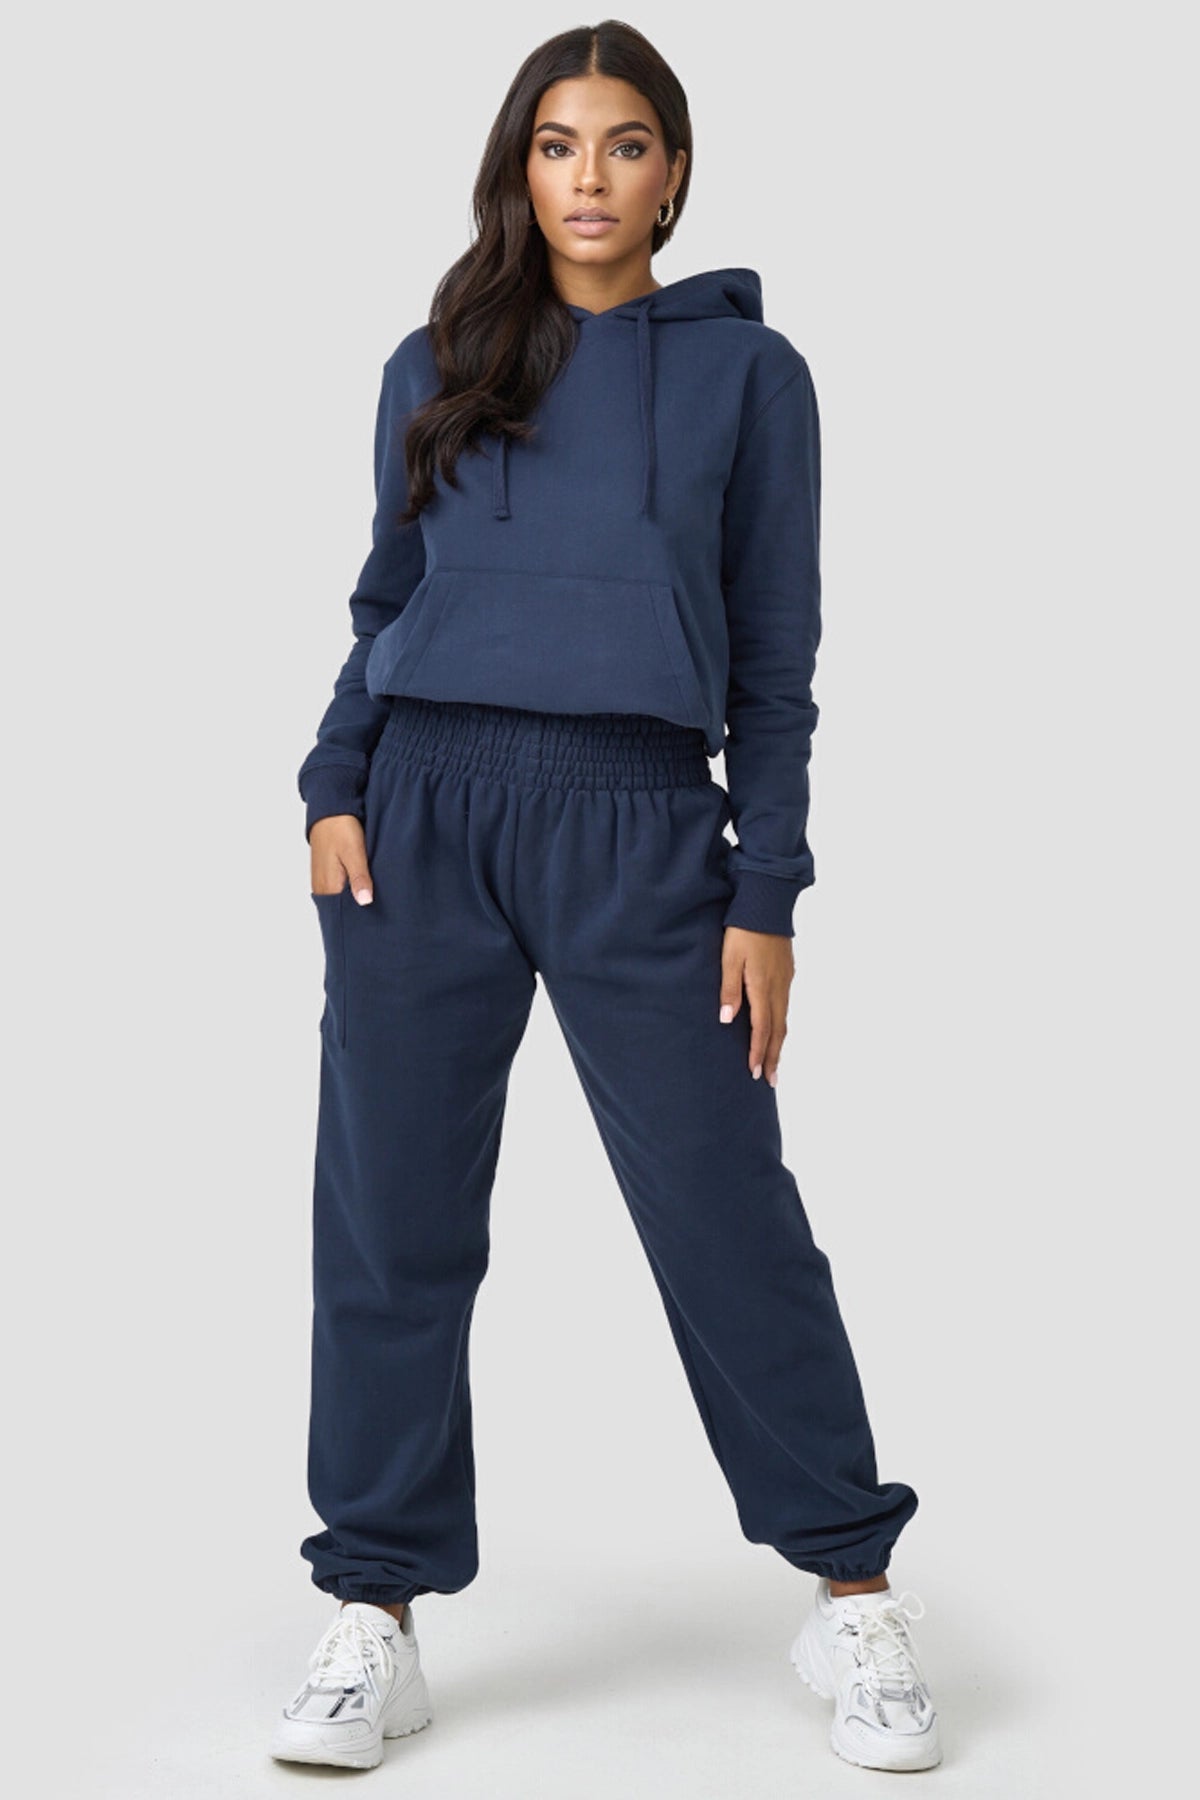 Frau in warmen Loungewear Haremshose dunkelblau kombiniert mit dem passenden Hoodie in dunkelblau